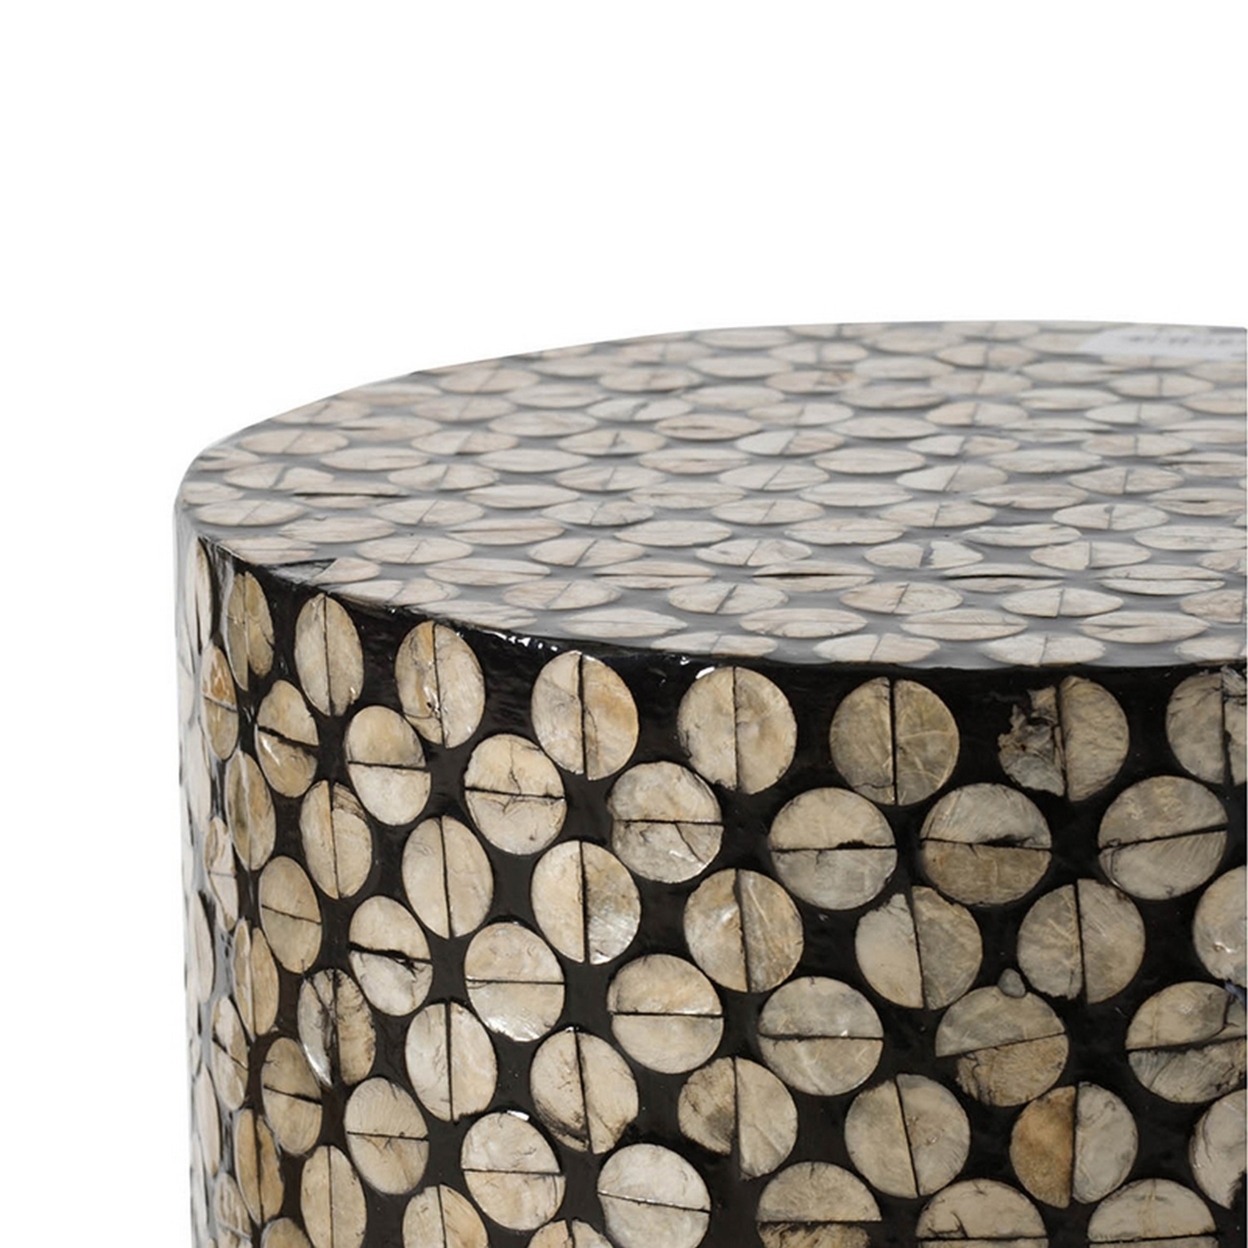 20 Inch Stool Table, Round Wood Design, Modern, Capiz Inlay, Black, White- Saltoro Sherpi